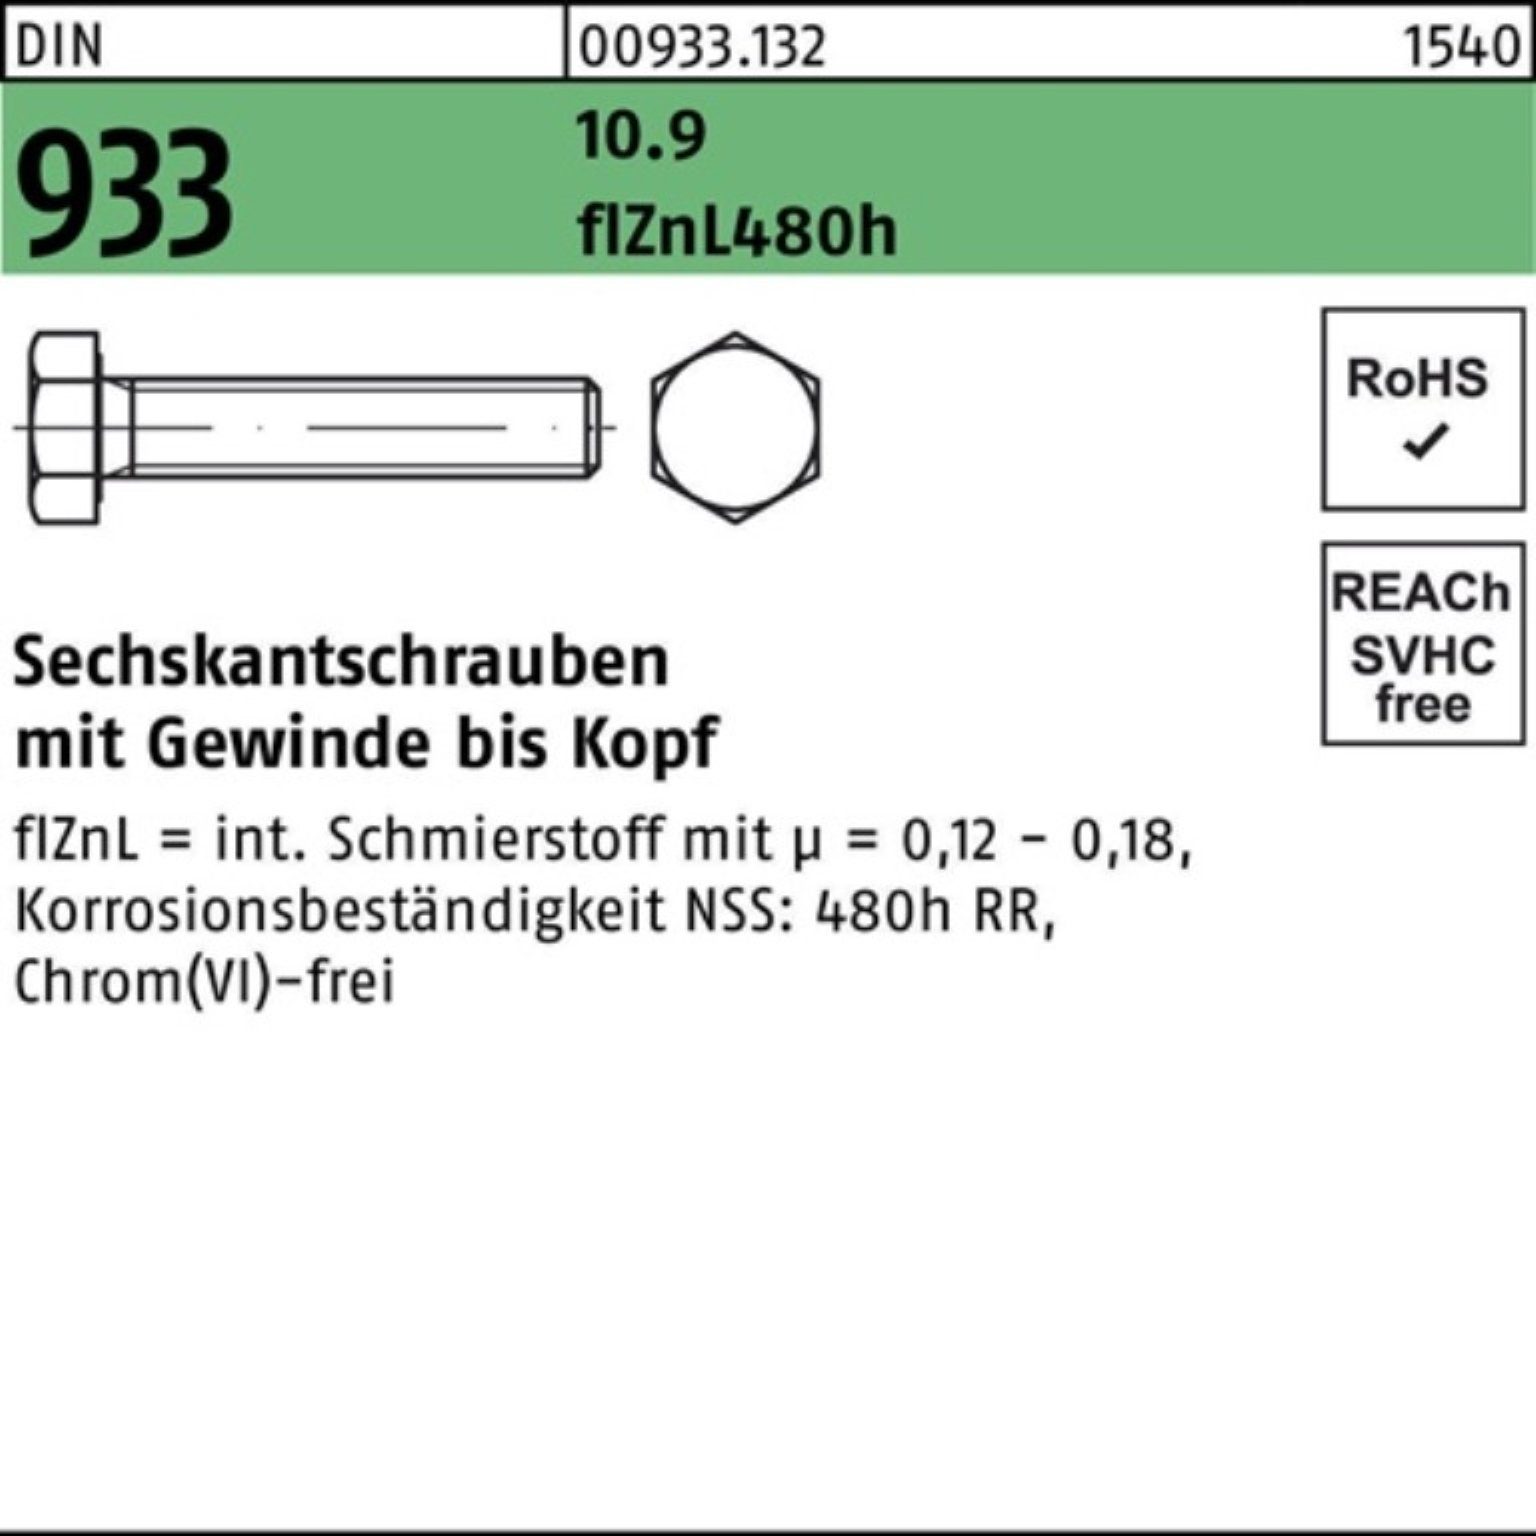 Reyher Sechskantschraube 100er Pack Sechskantschraube DIN 933 VG M16x 35 10.9 flZnL/nc/x/x/480h